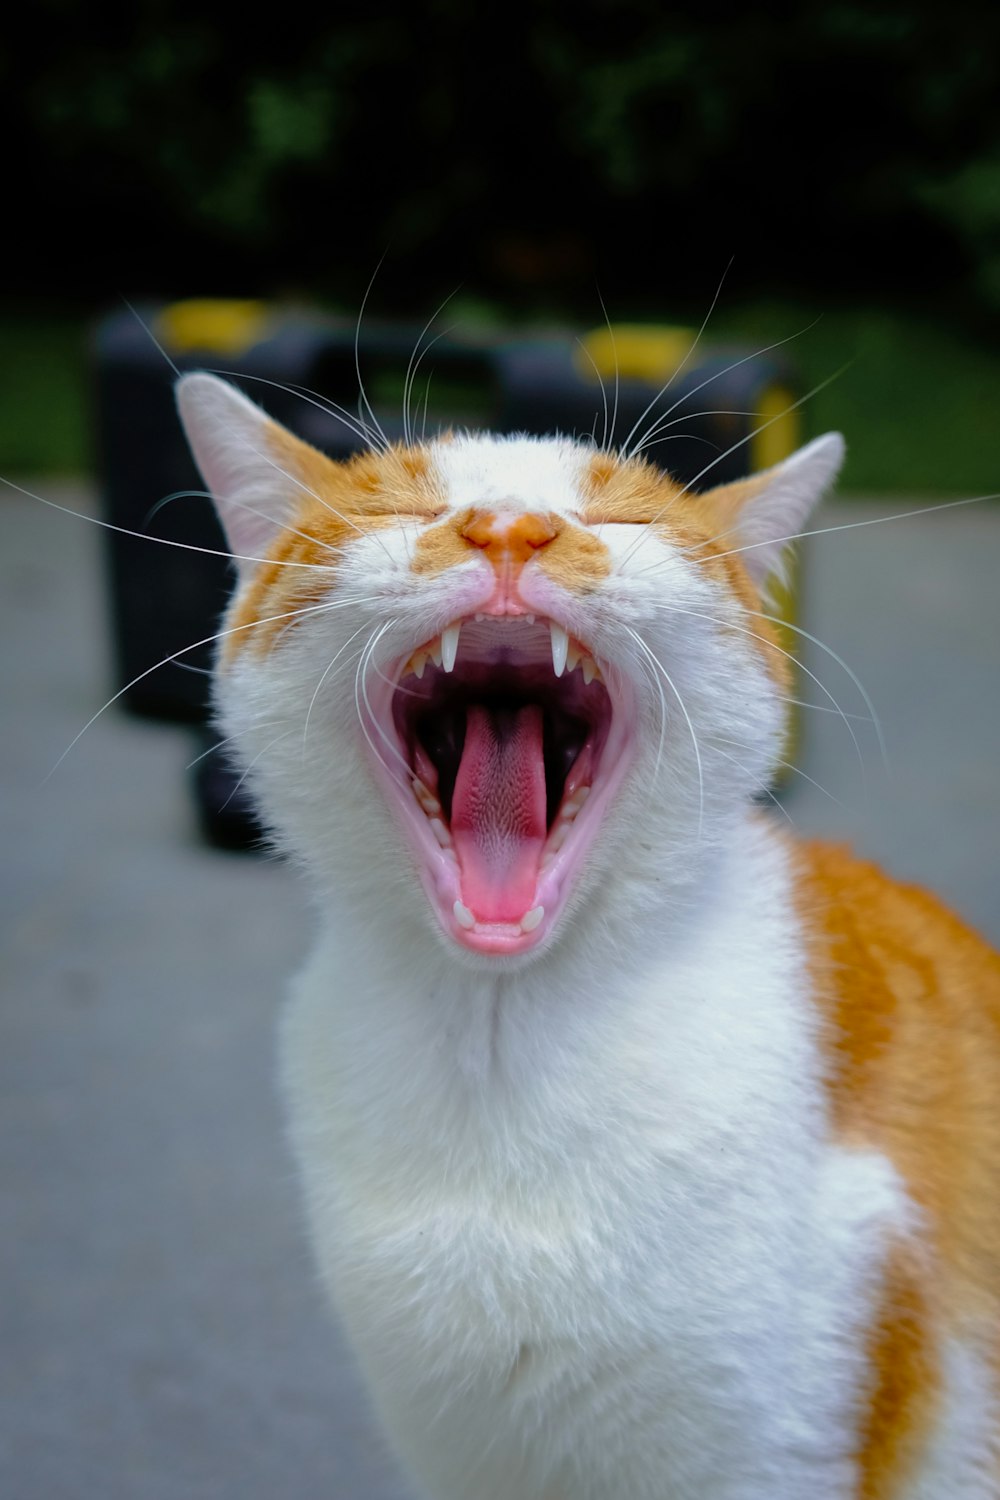 orange and white cat showing tongue